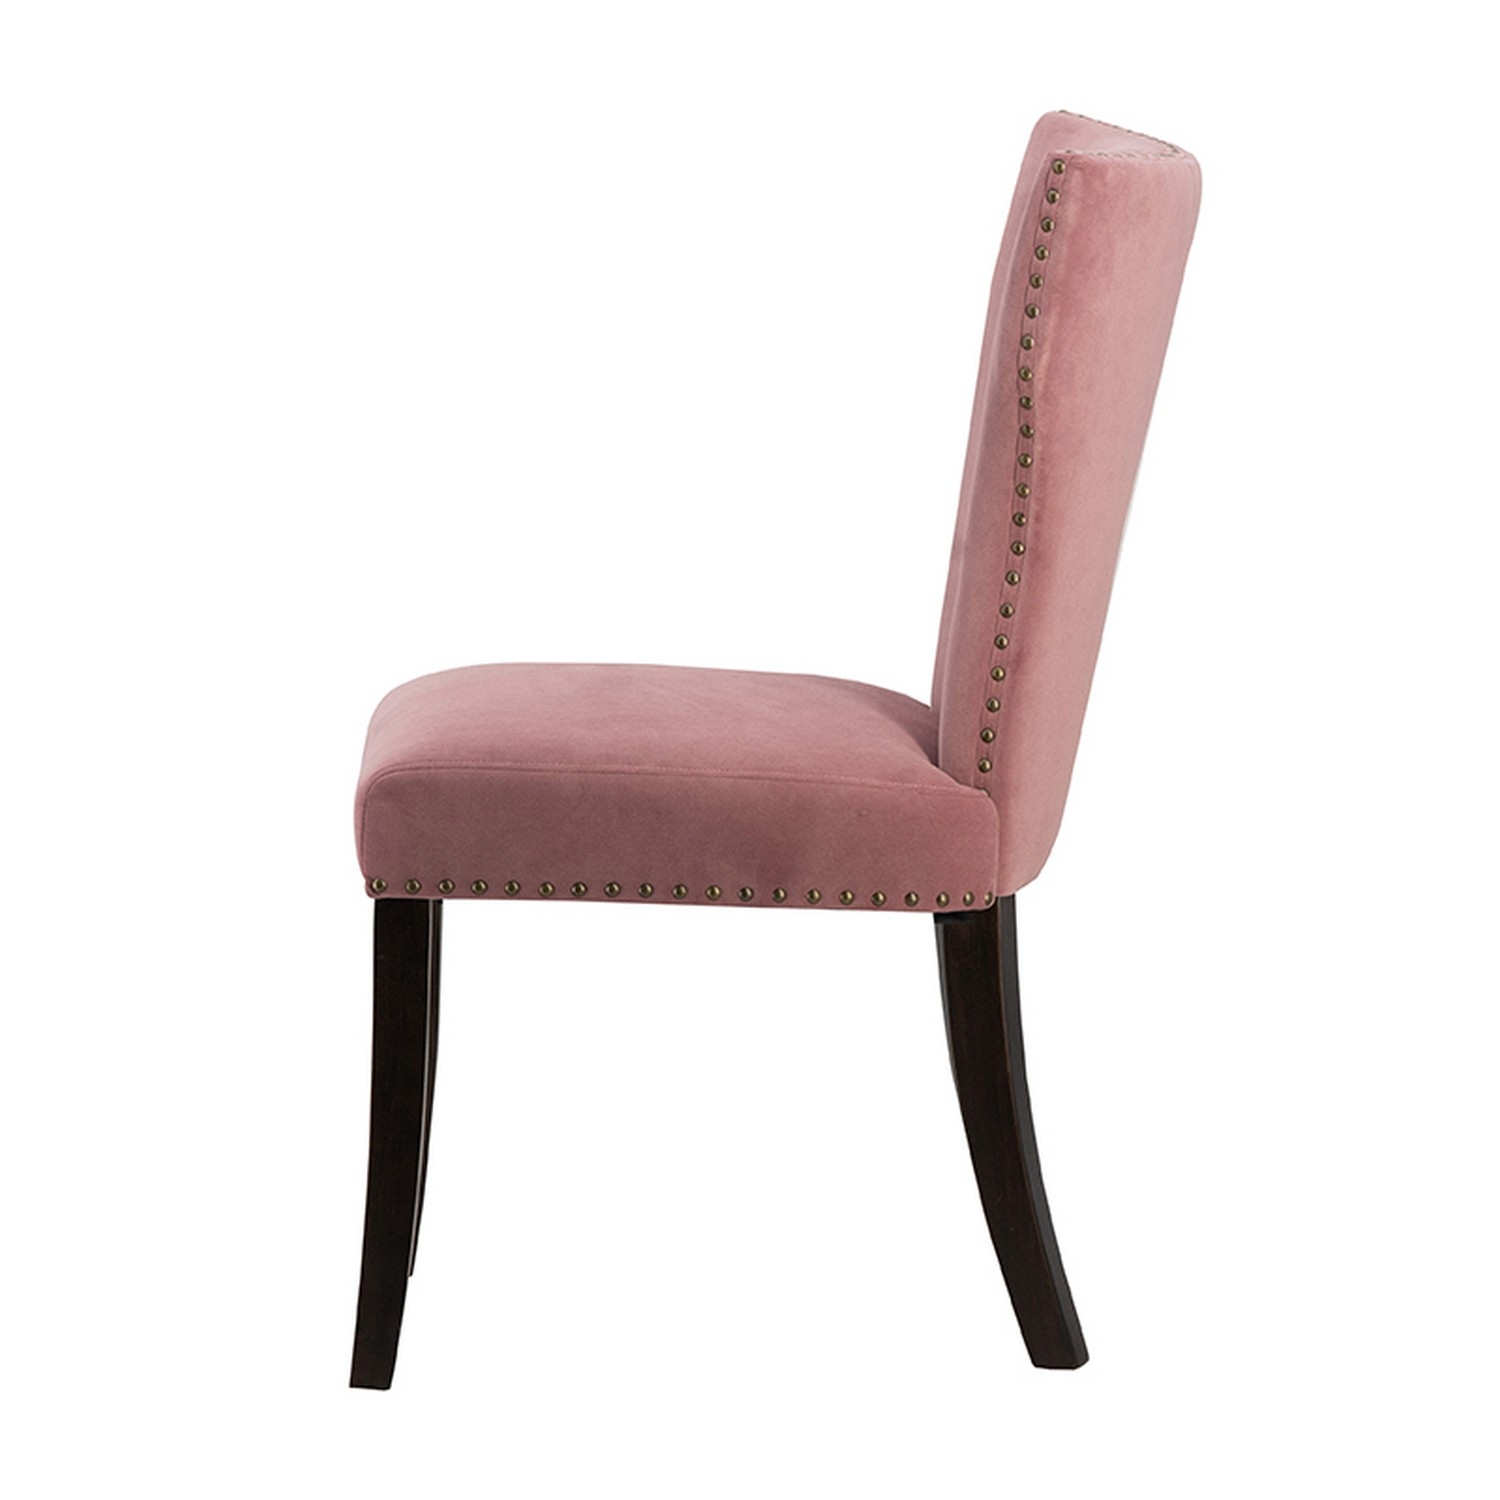 Devi 25 Inch Curved Dining Chair, Pink Velvet Upholstery, Nailhead Trim- Saltoro Sherpi